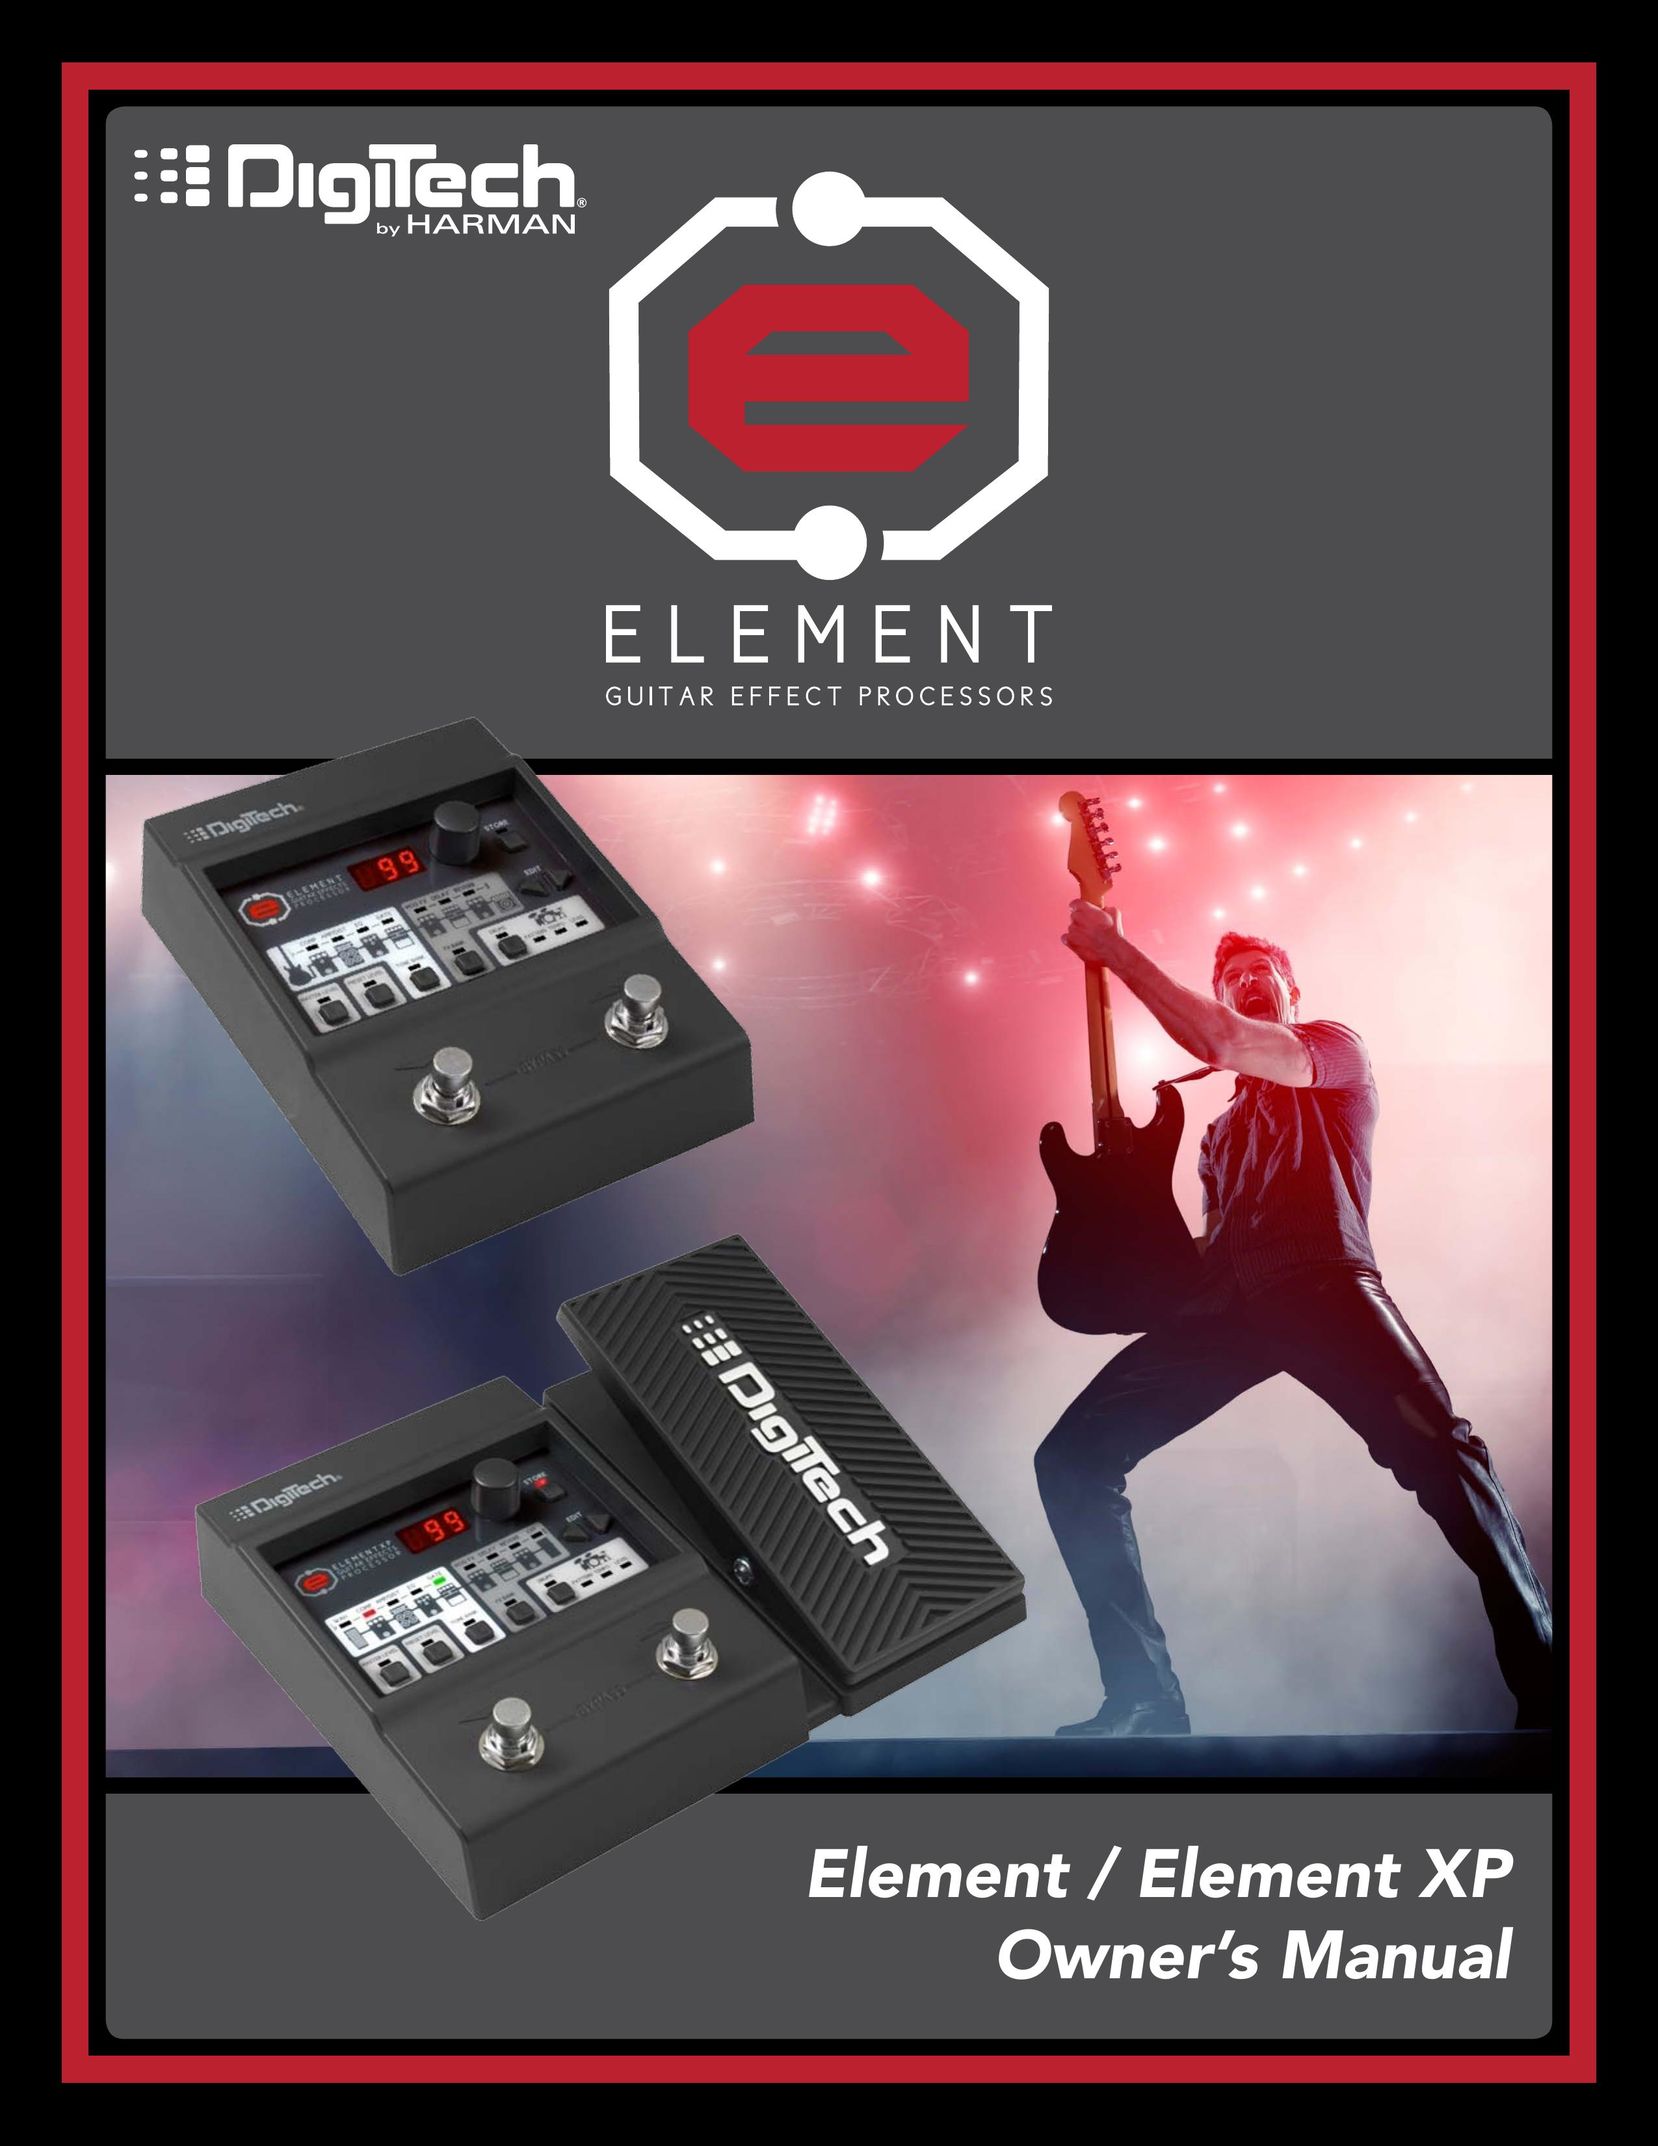 DigiTech Element XP Musical Toy Instrument User Manual